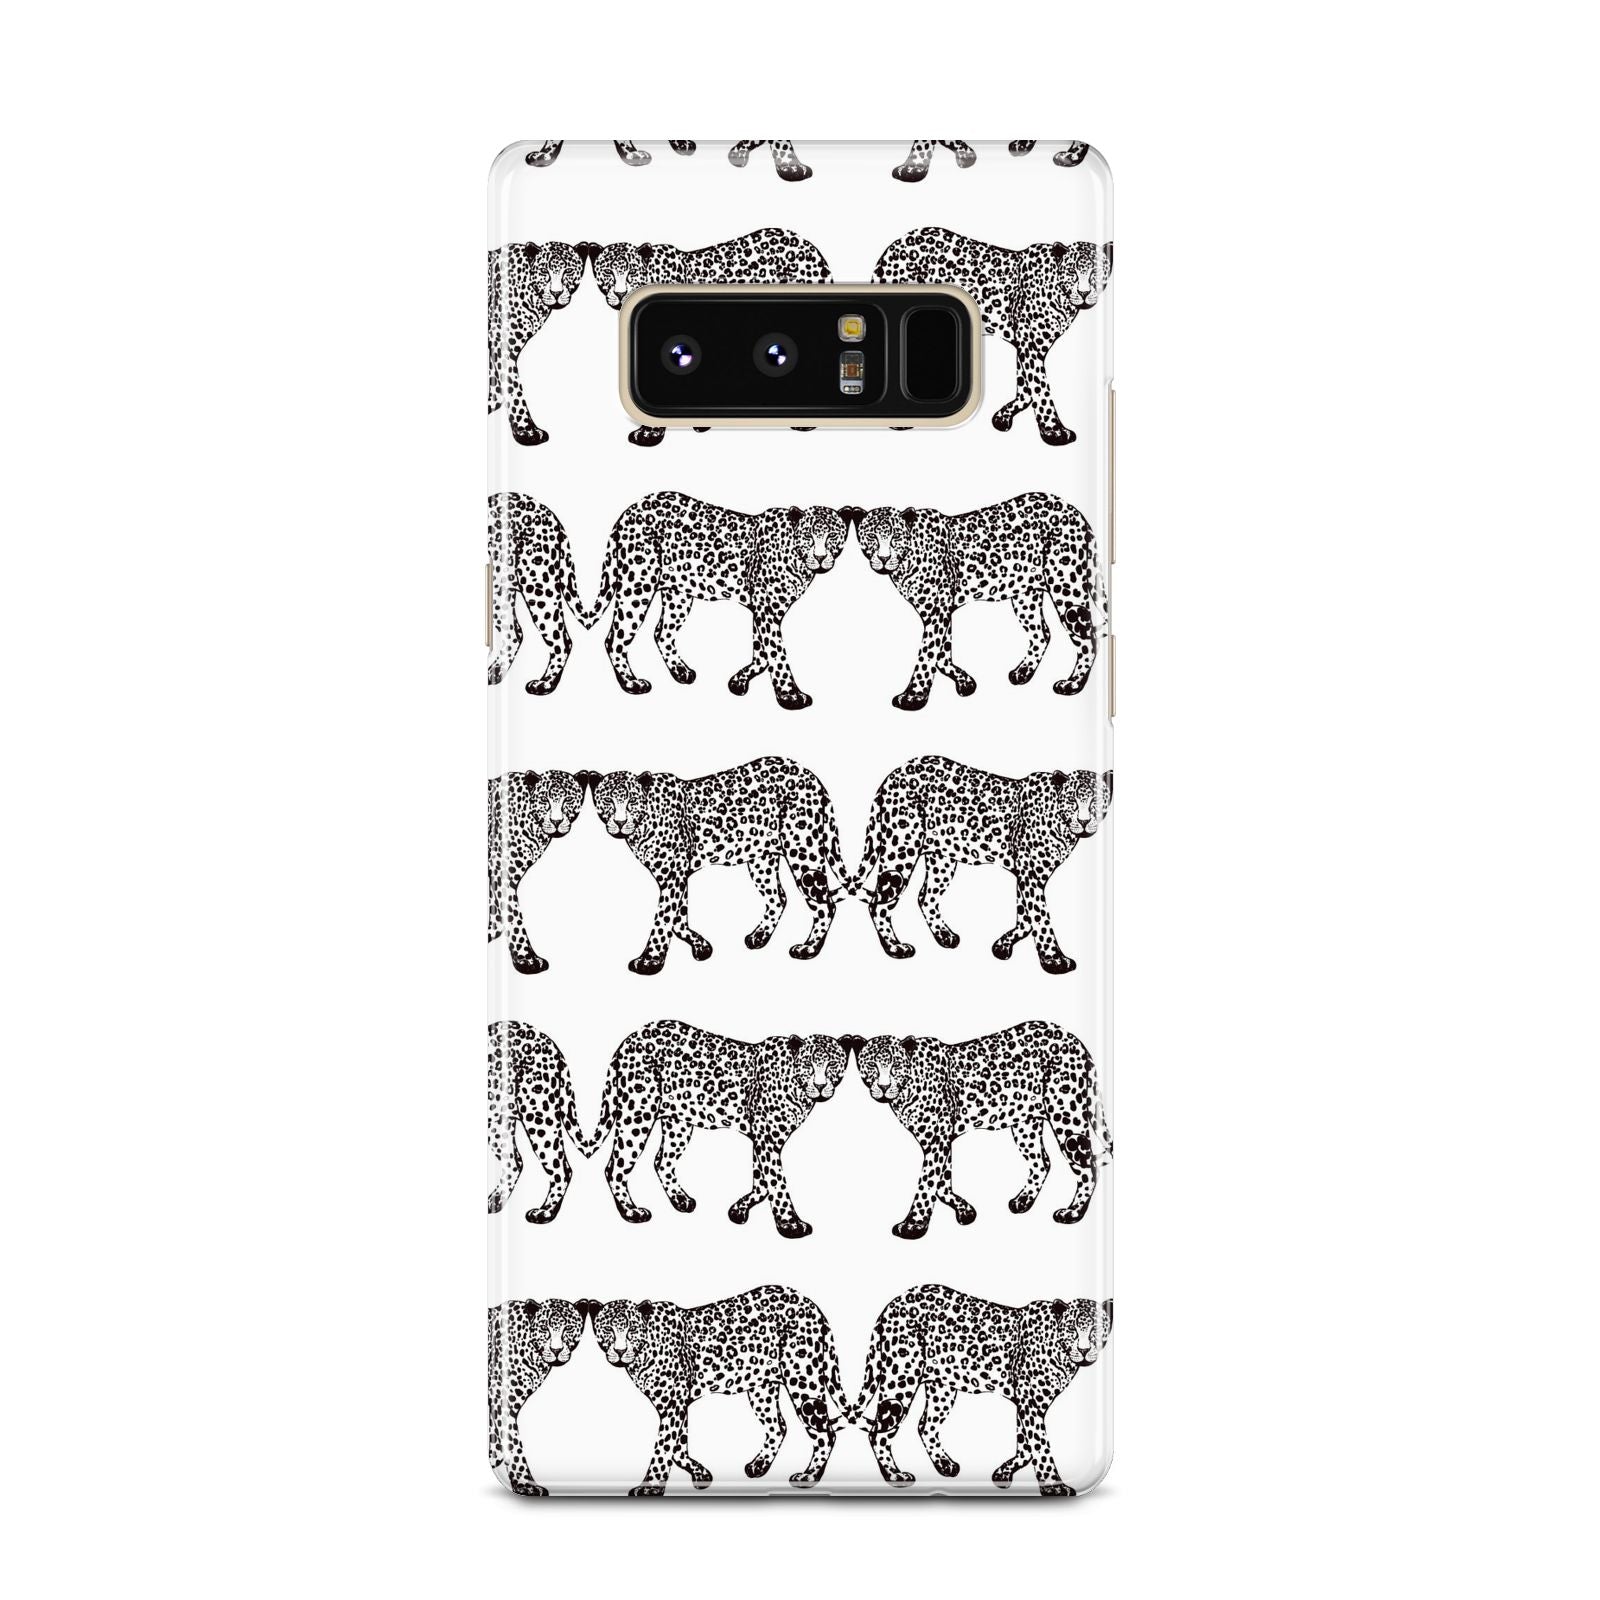 Monochrome Mirrored Leopard Print Samsung Galaxy Note 8 Case